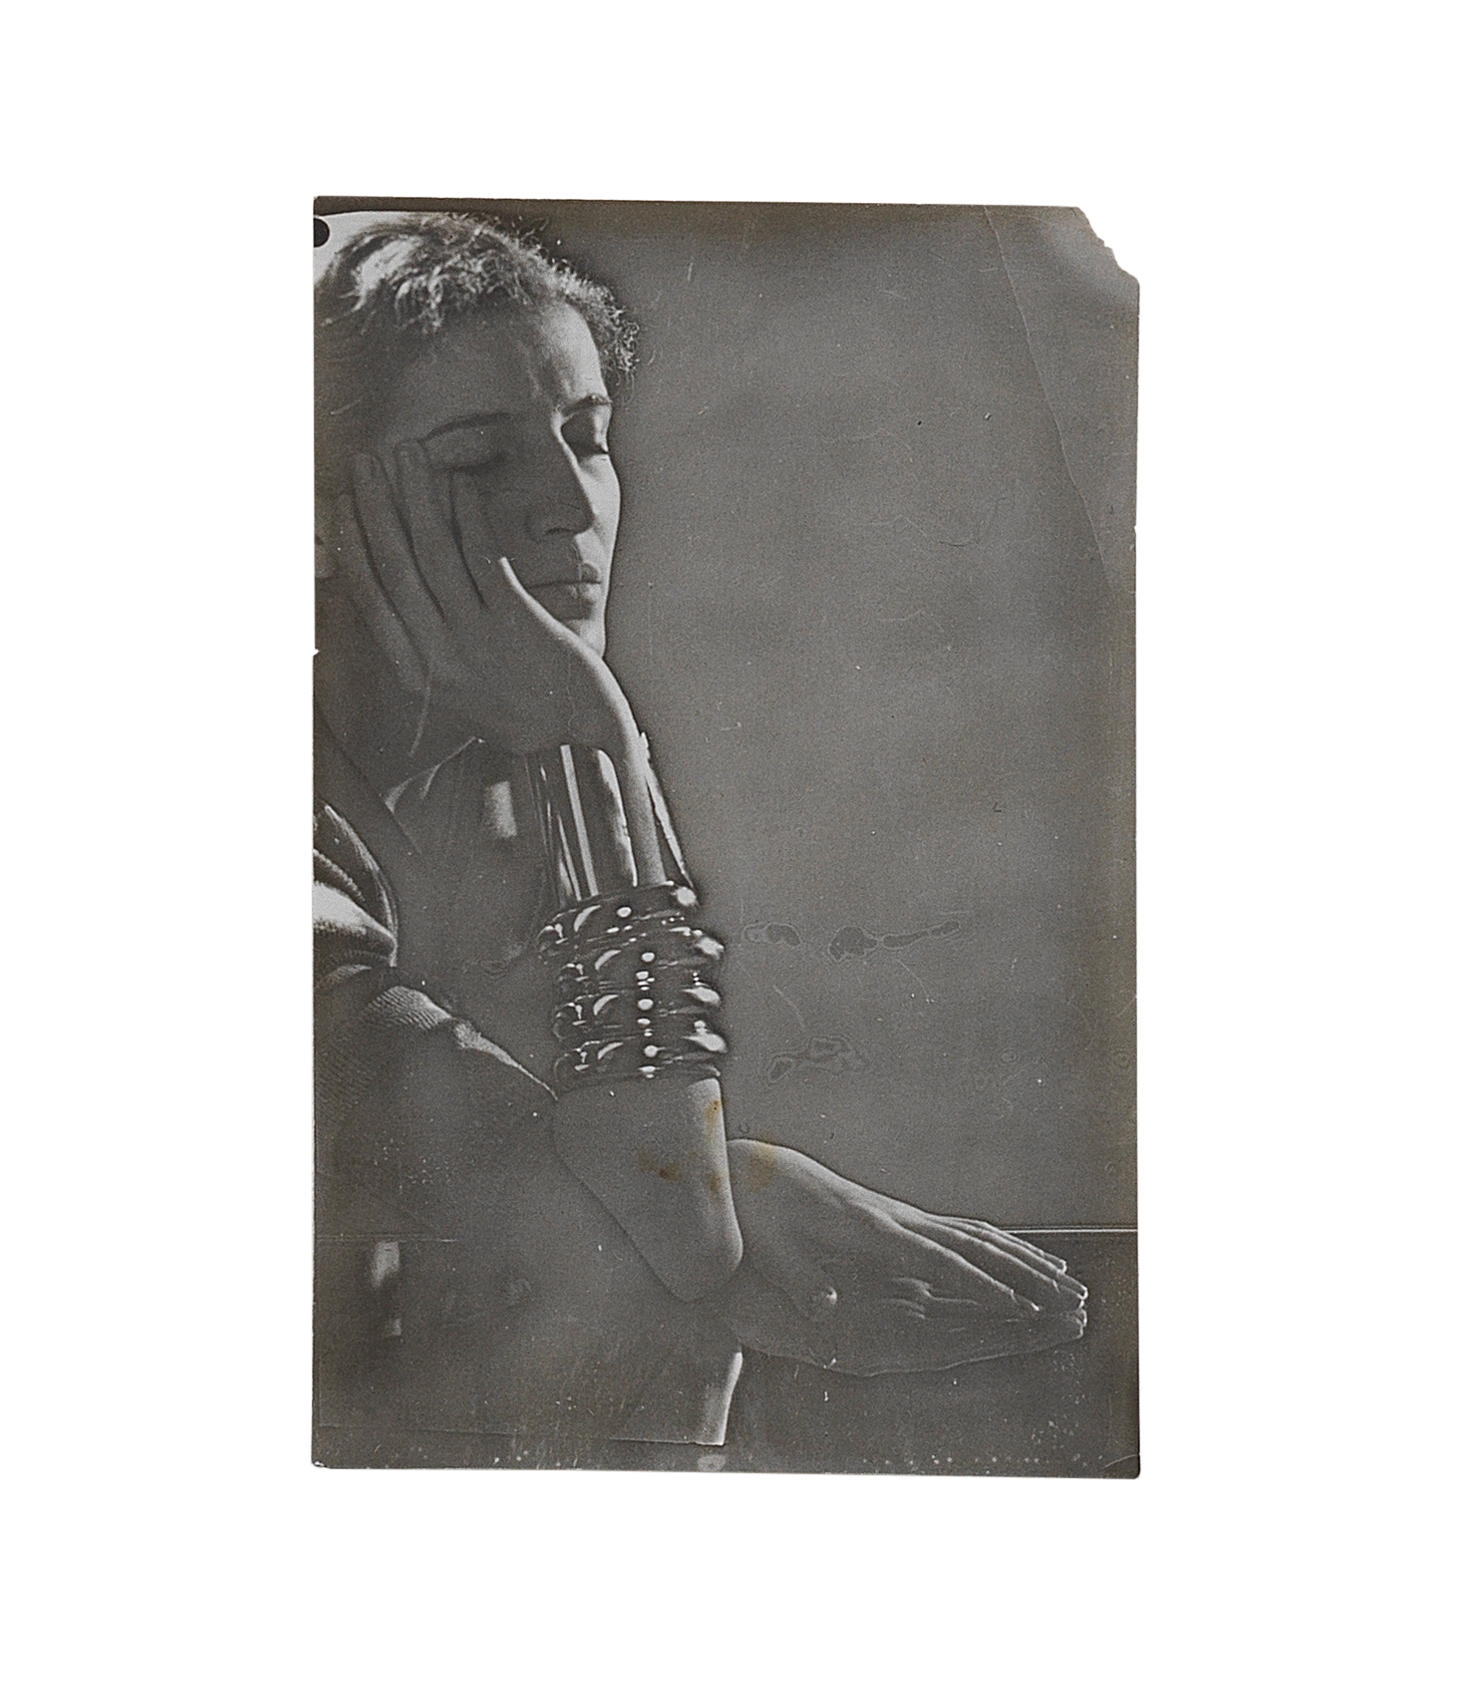 Sans titre (Jacqueline Barsotti-Goddard) by Man Ray, 1930